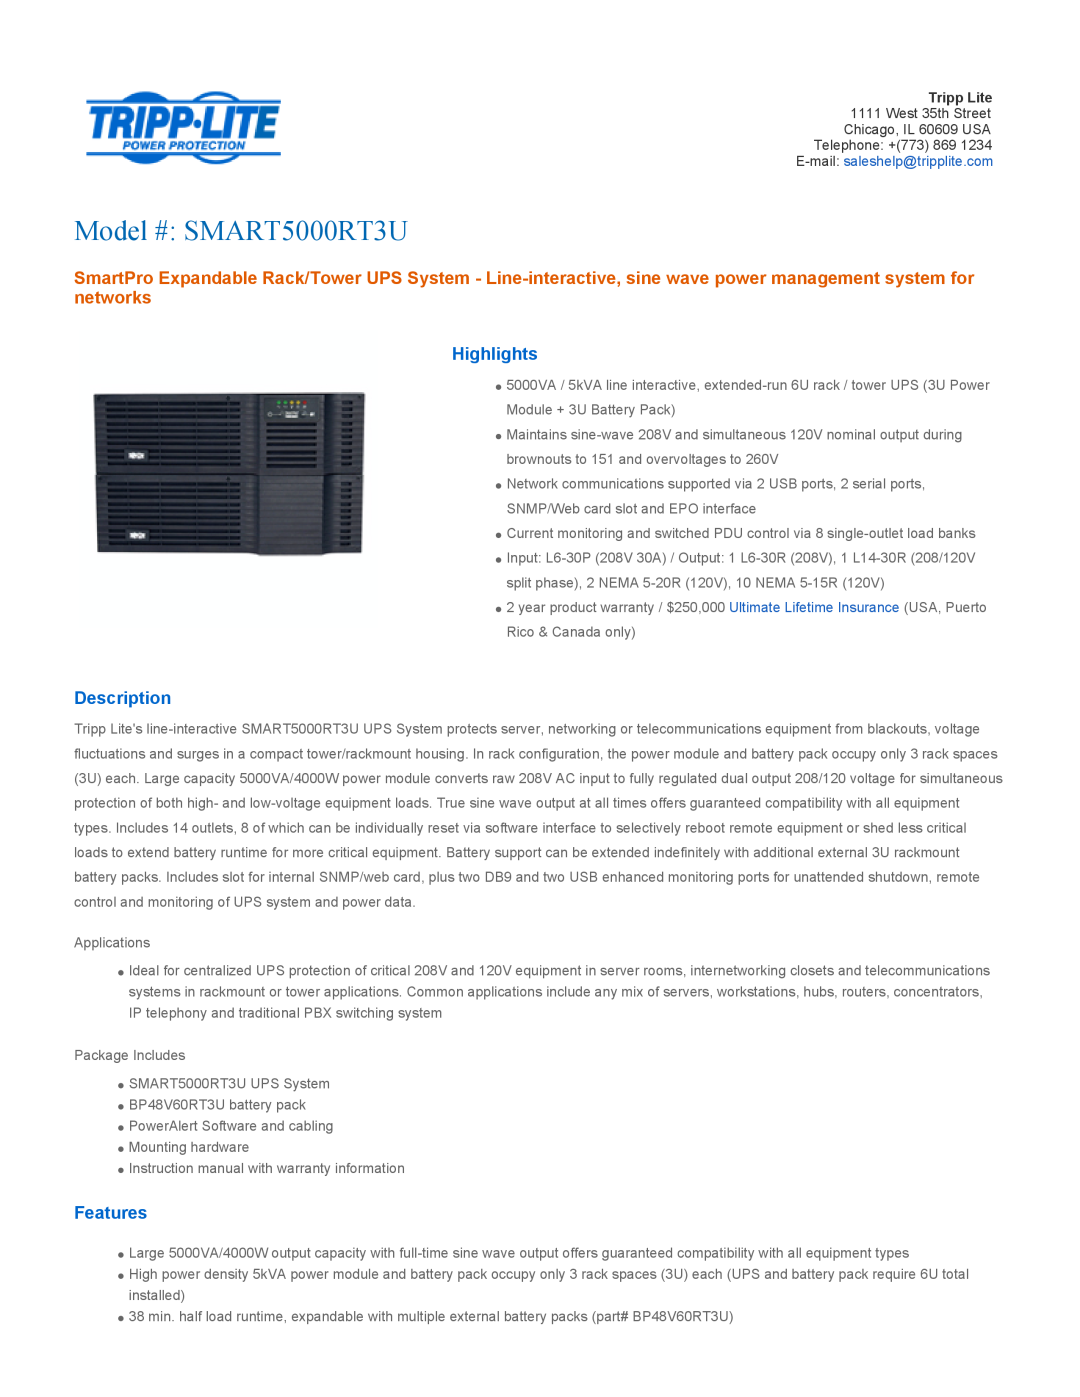 Tripp Lite warranty Highlights, Description, Features, Model # SMART5000RT3U 